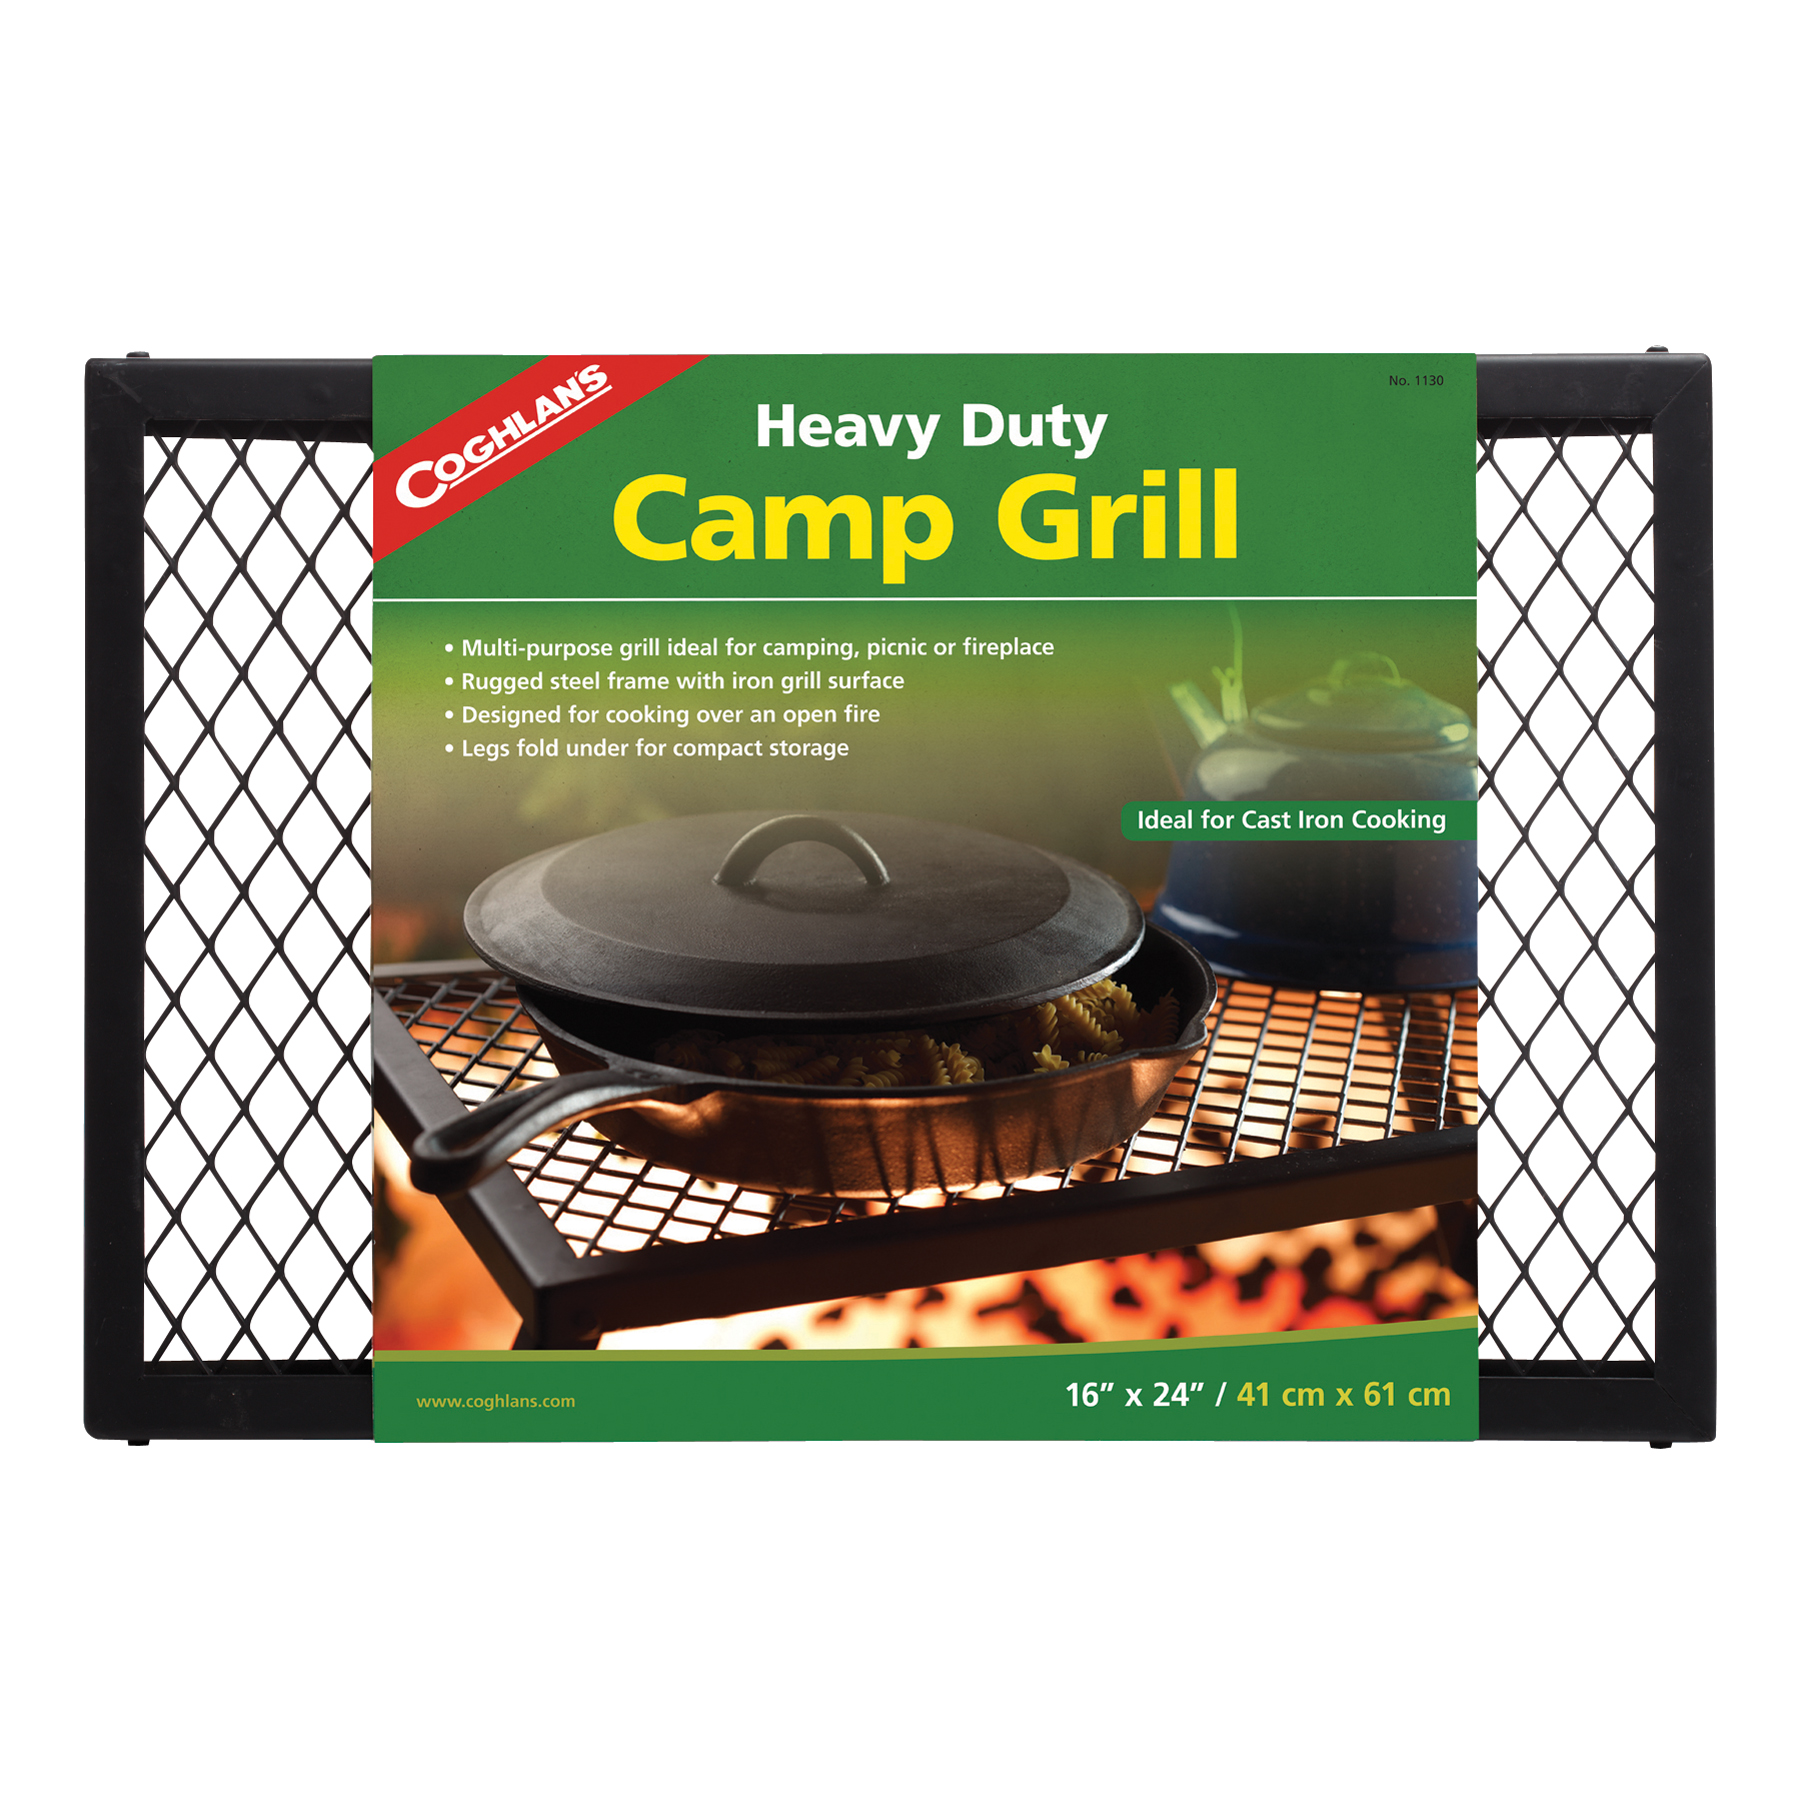 Coghlan ft s Heavy Duty Camp Grill 1130